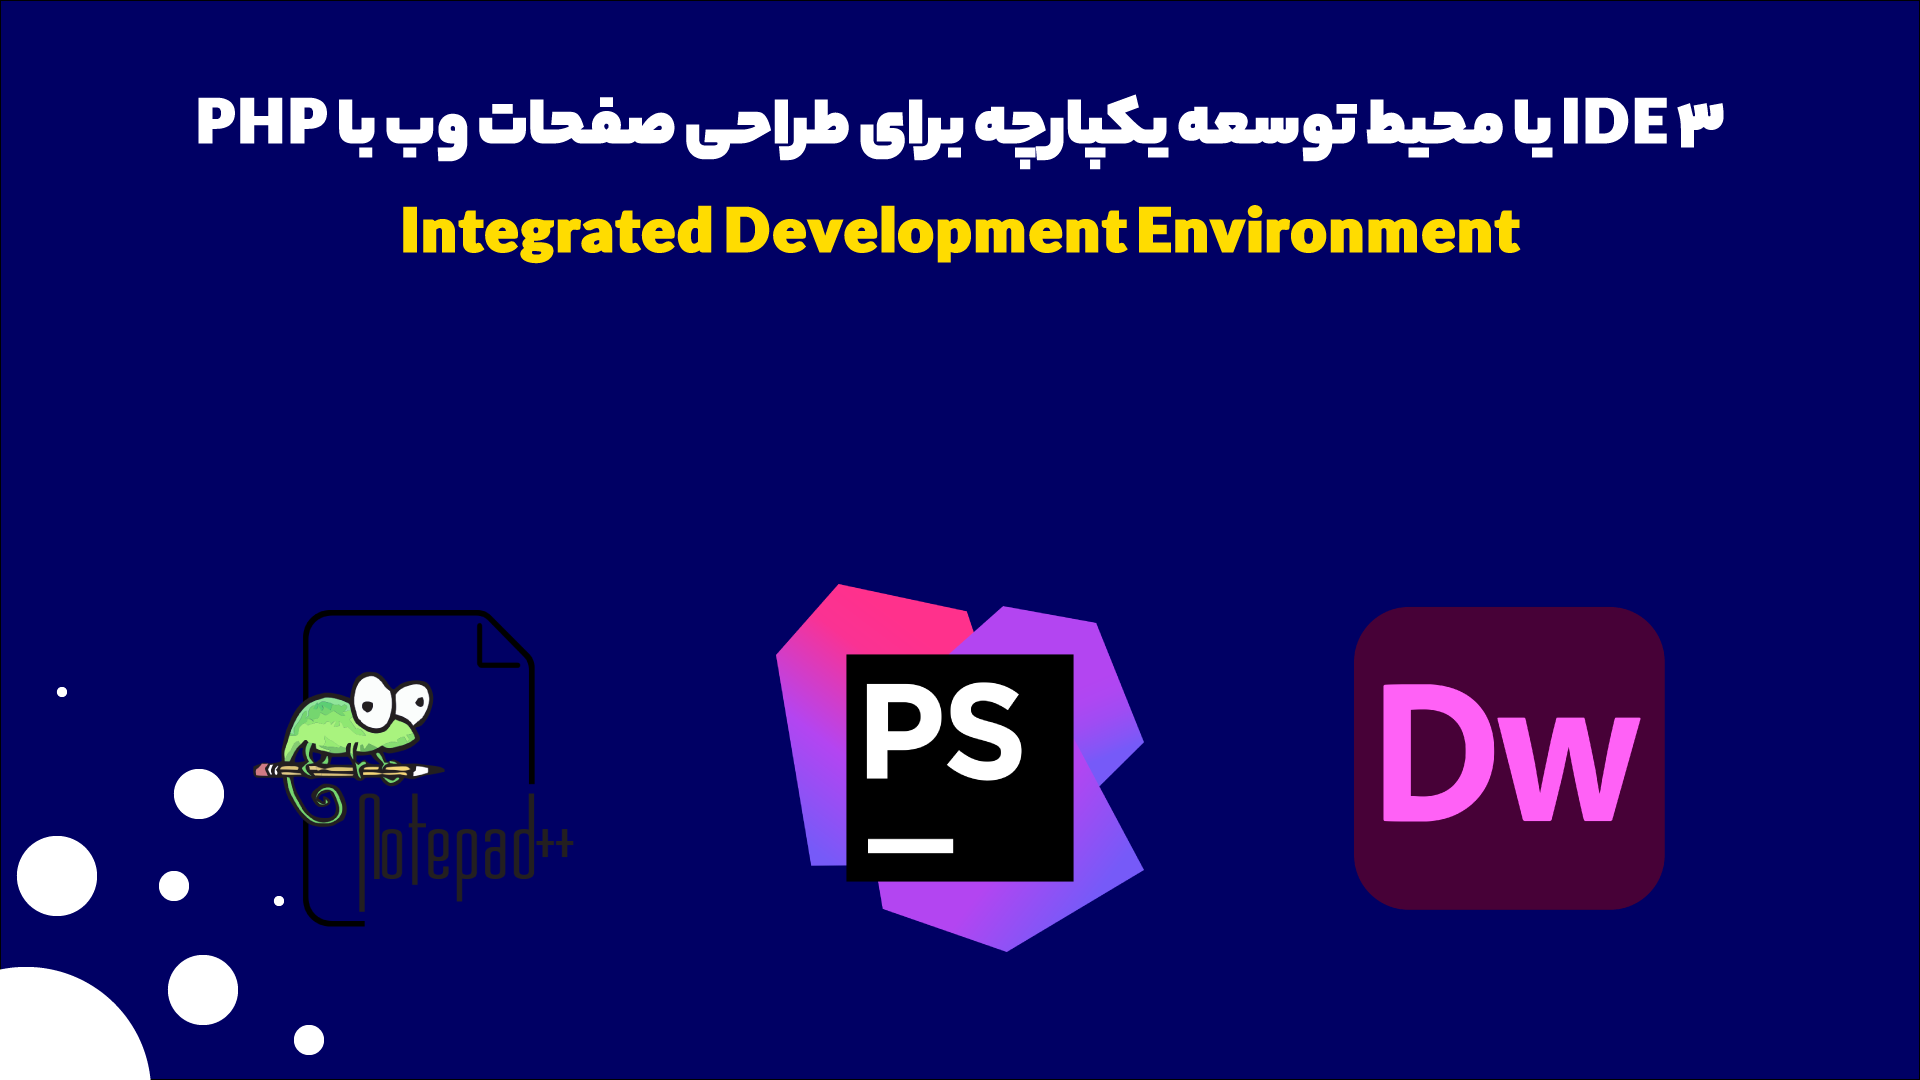 ۳ IDE یا محیط توسعه یکپارچه برای طراحی صفحات وب با PHP 